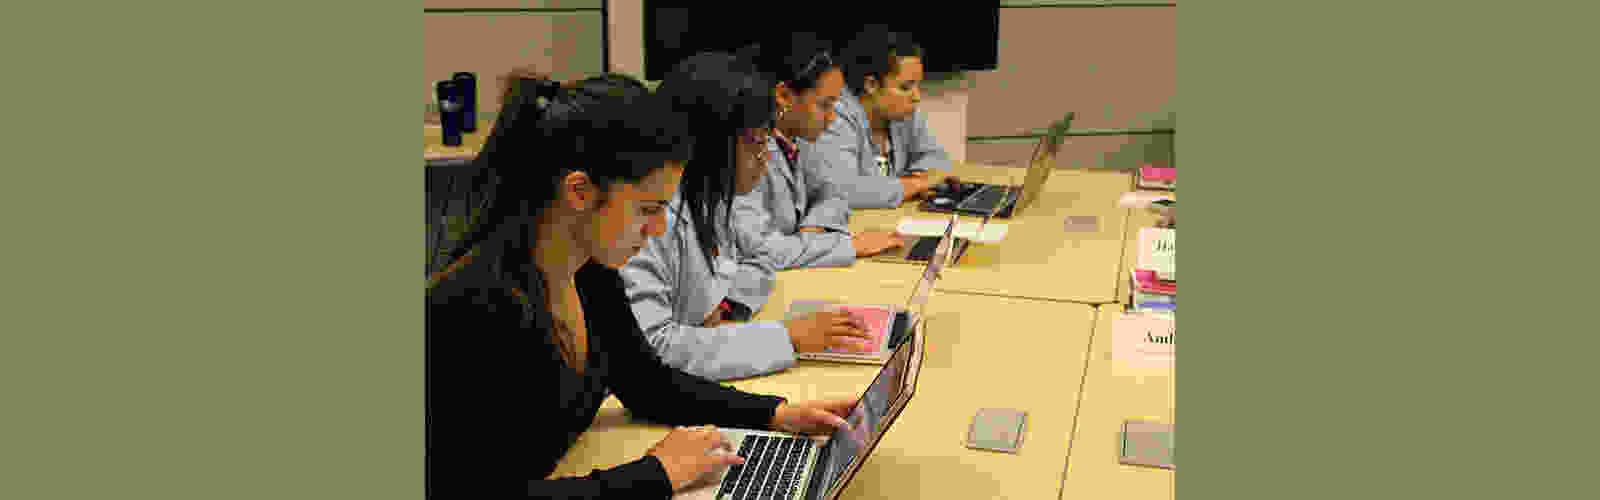 Students-on-laptop.jpg